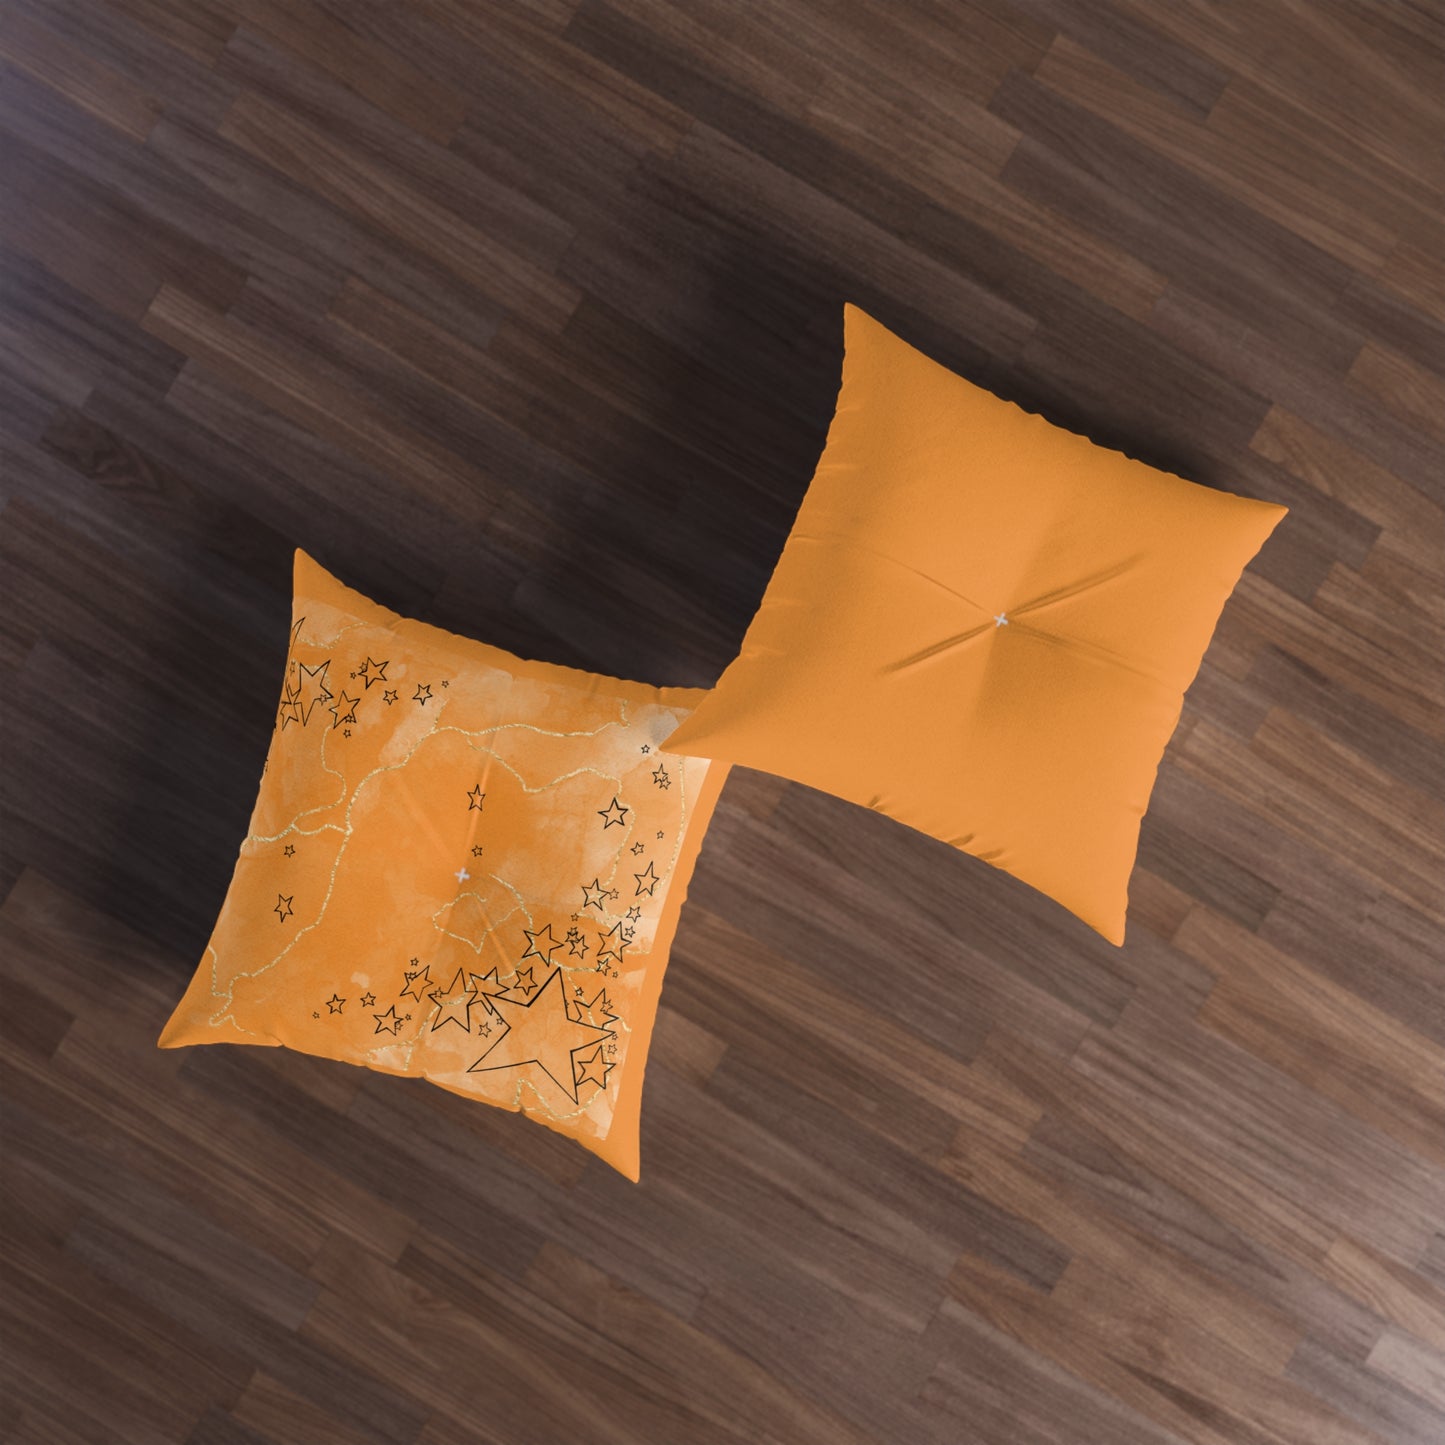 Orange Tufted  Square Floor Pillow with Star Illustration